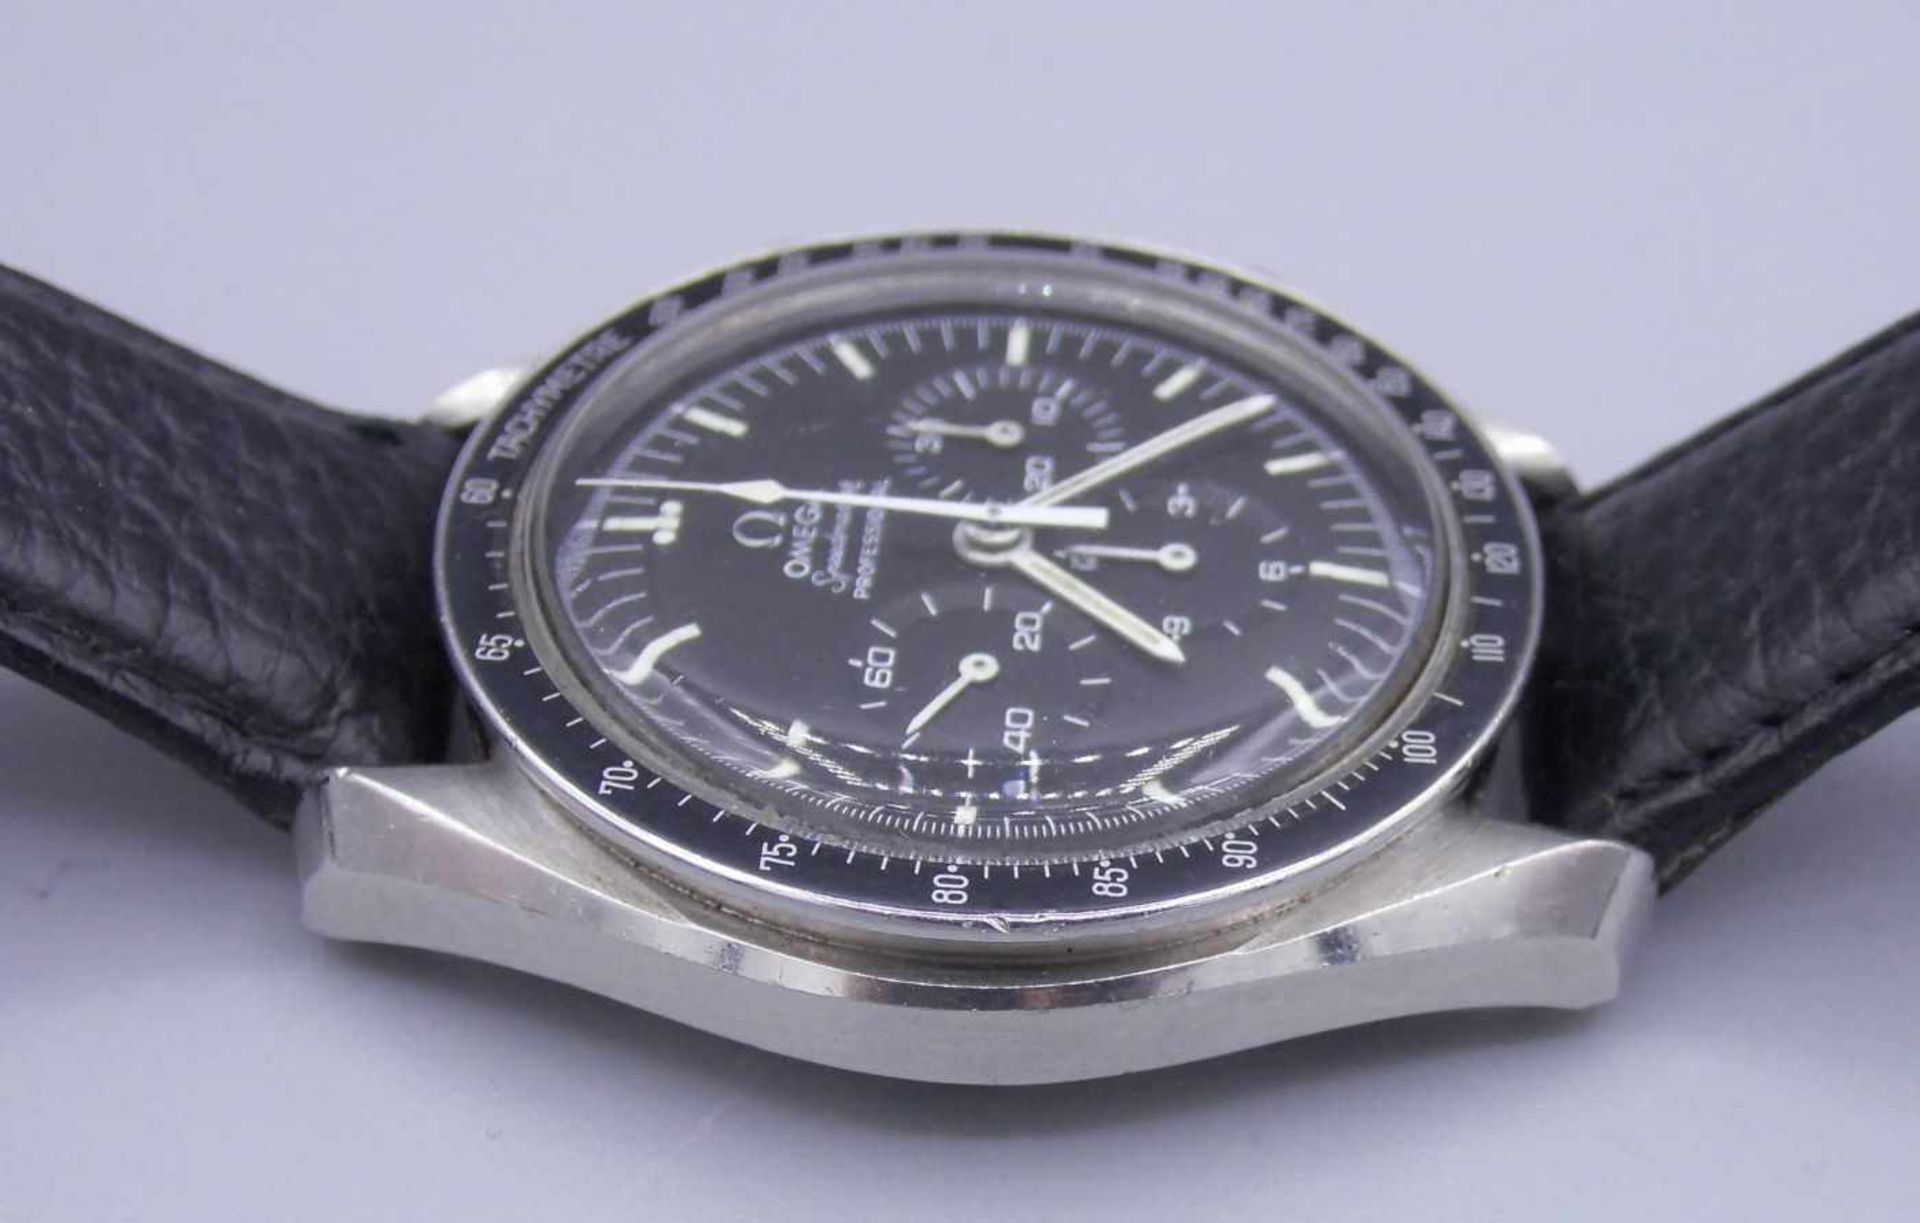 VINTAGE ARMBANDUHR / CHRONOGRAPH: OMEGA SPEEDMASTER PFROFESSIONAL - "MOONWATCH" / wristwatch, - Image 6 of 10